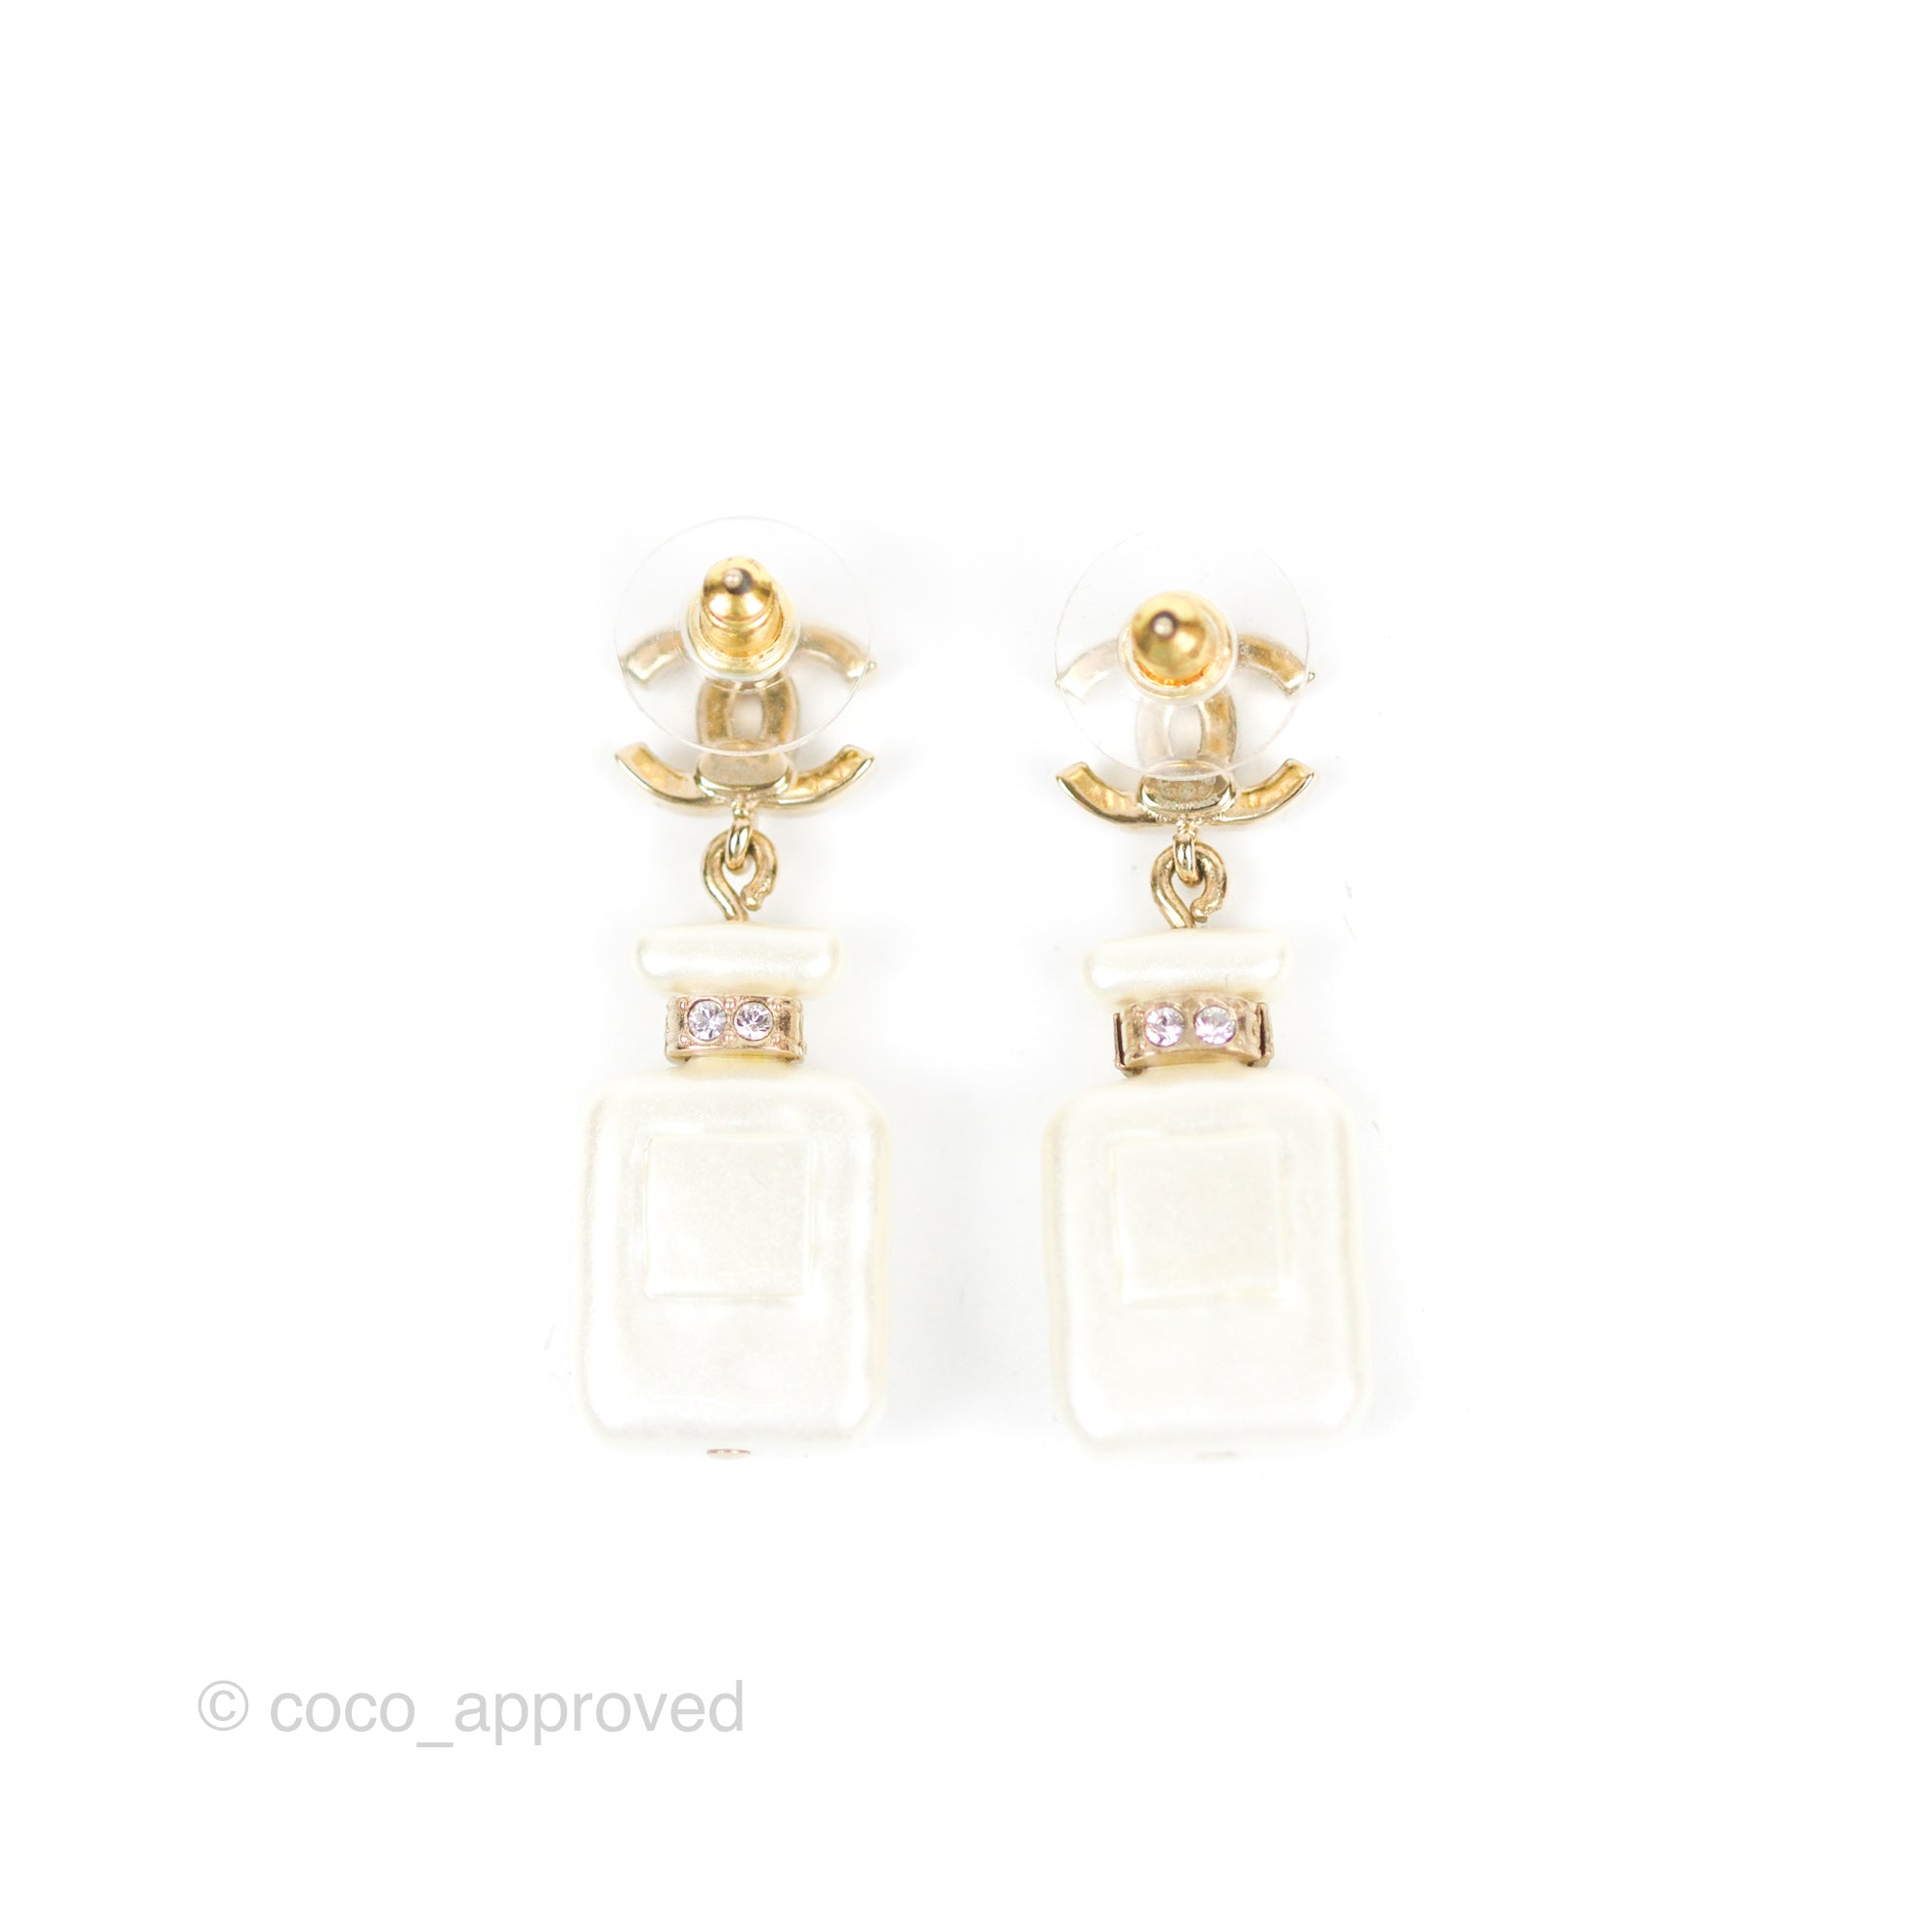 Chanel Gold Metal Resin No. 5 Perfume Bottle CC Drop Earrings, 2005, Drop | Fashion Earrings, Contemporary Jewelry